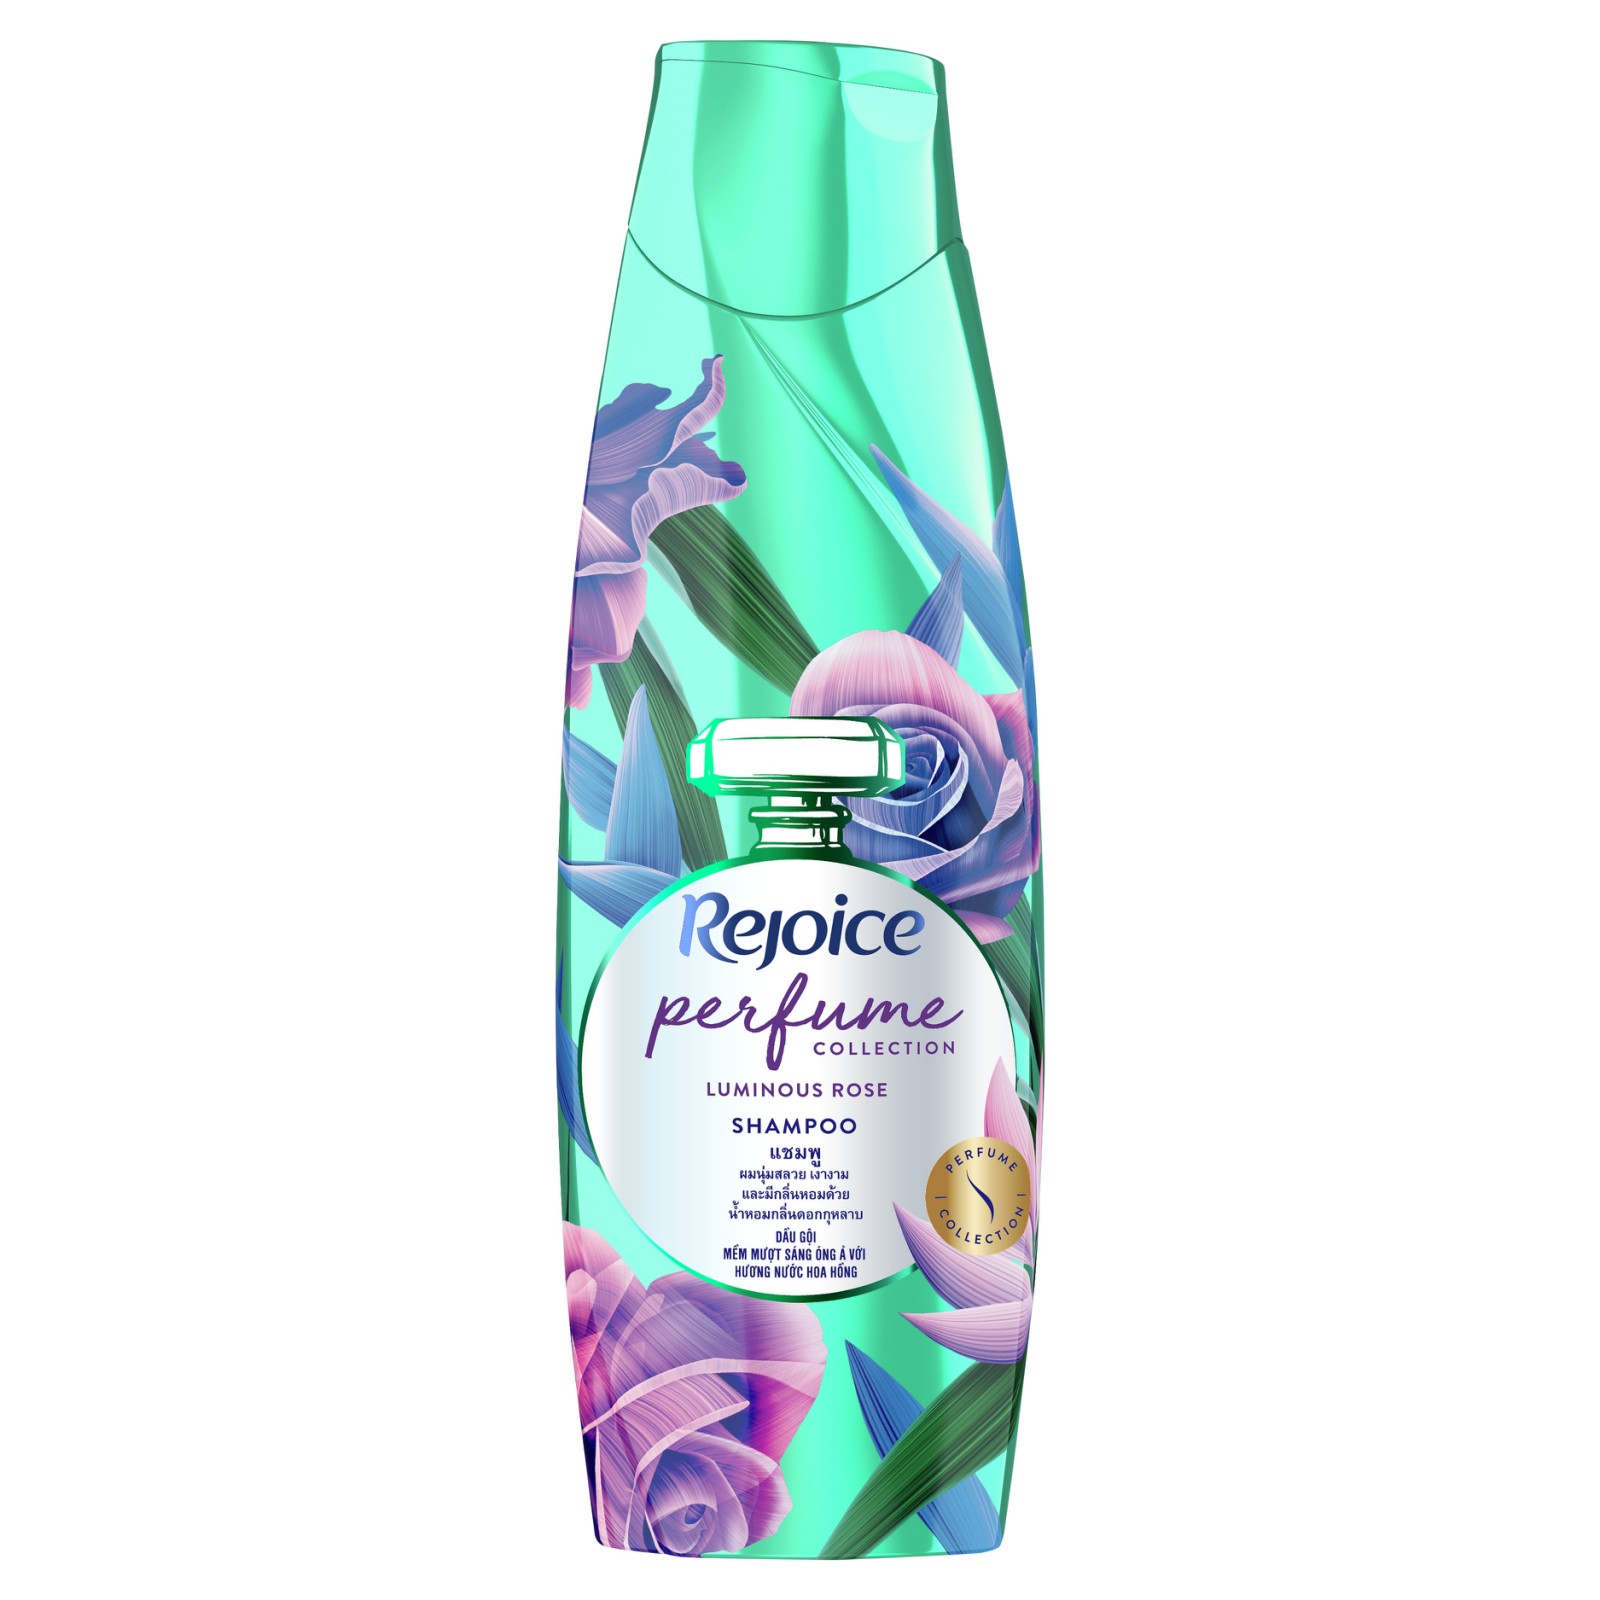 Rejoice Luminous Rose Shampoo 340ml